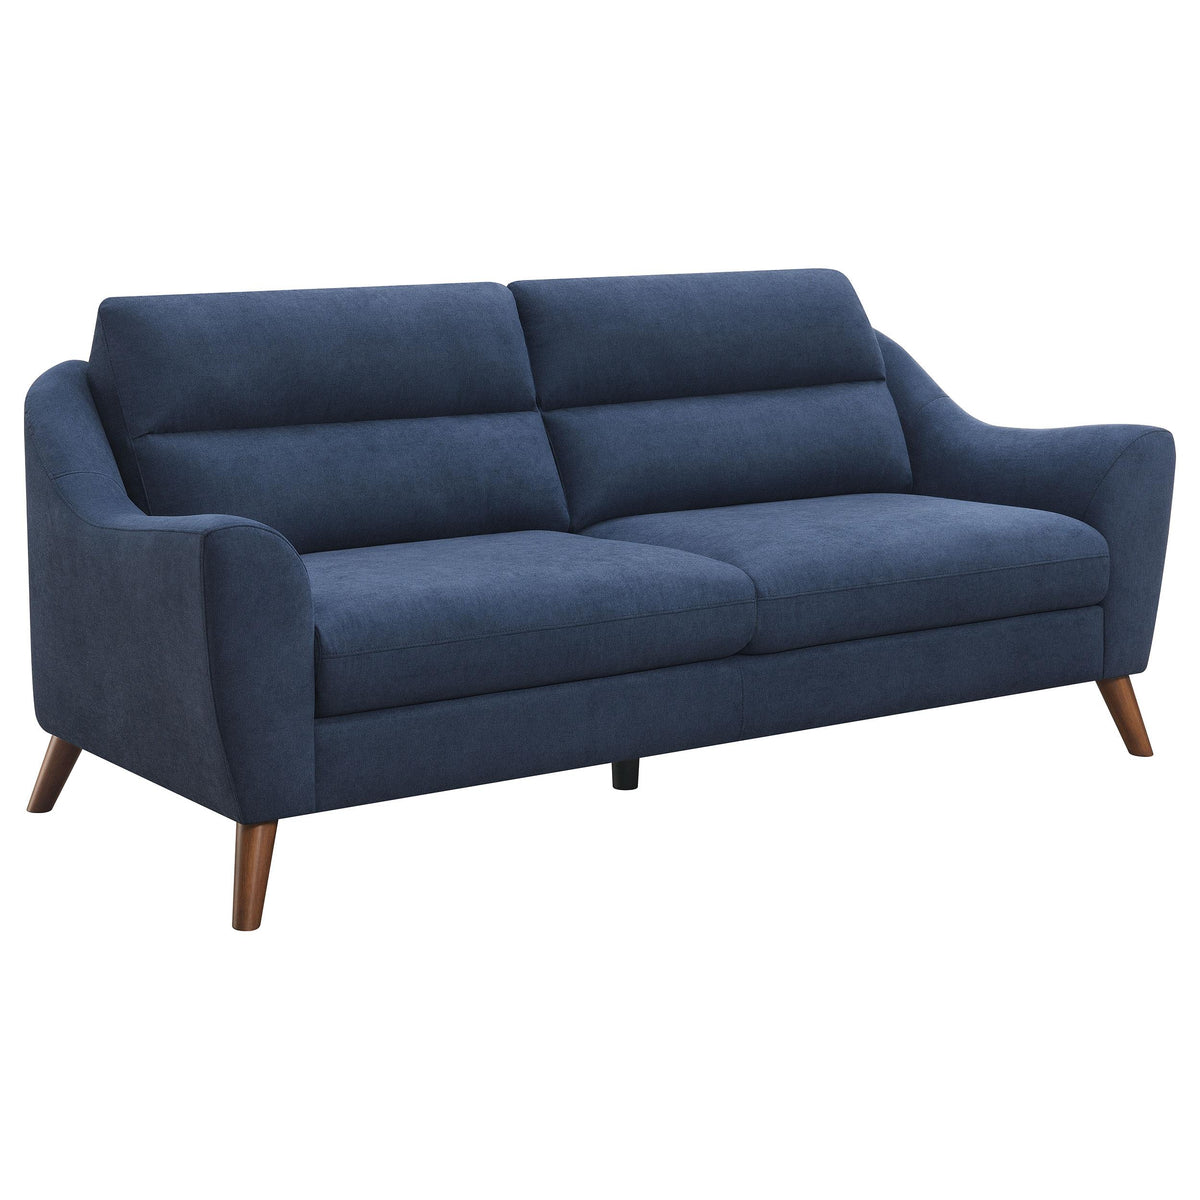 Gano Sloped Arm Upholstered Sofa Navy Blue Gano Sloped Arm Upholstered Sofa Navy Blue Half Price Furniture